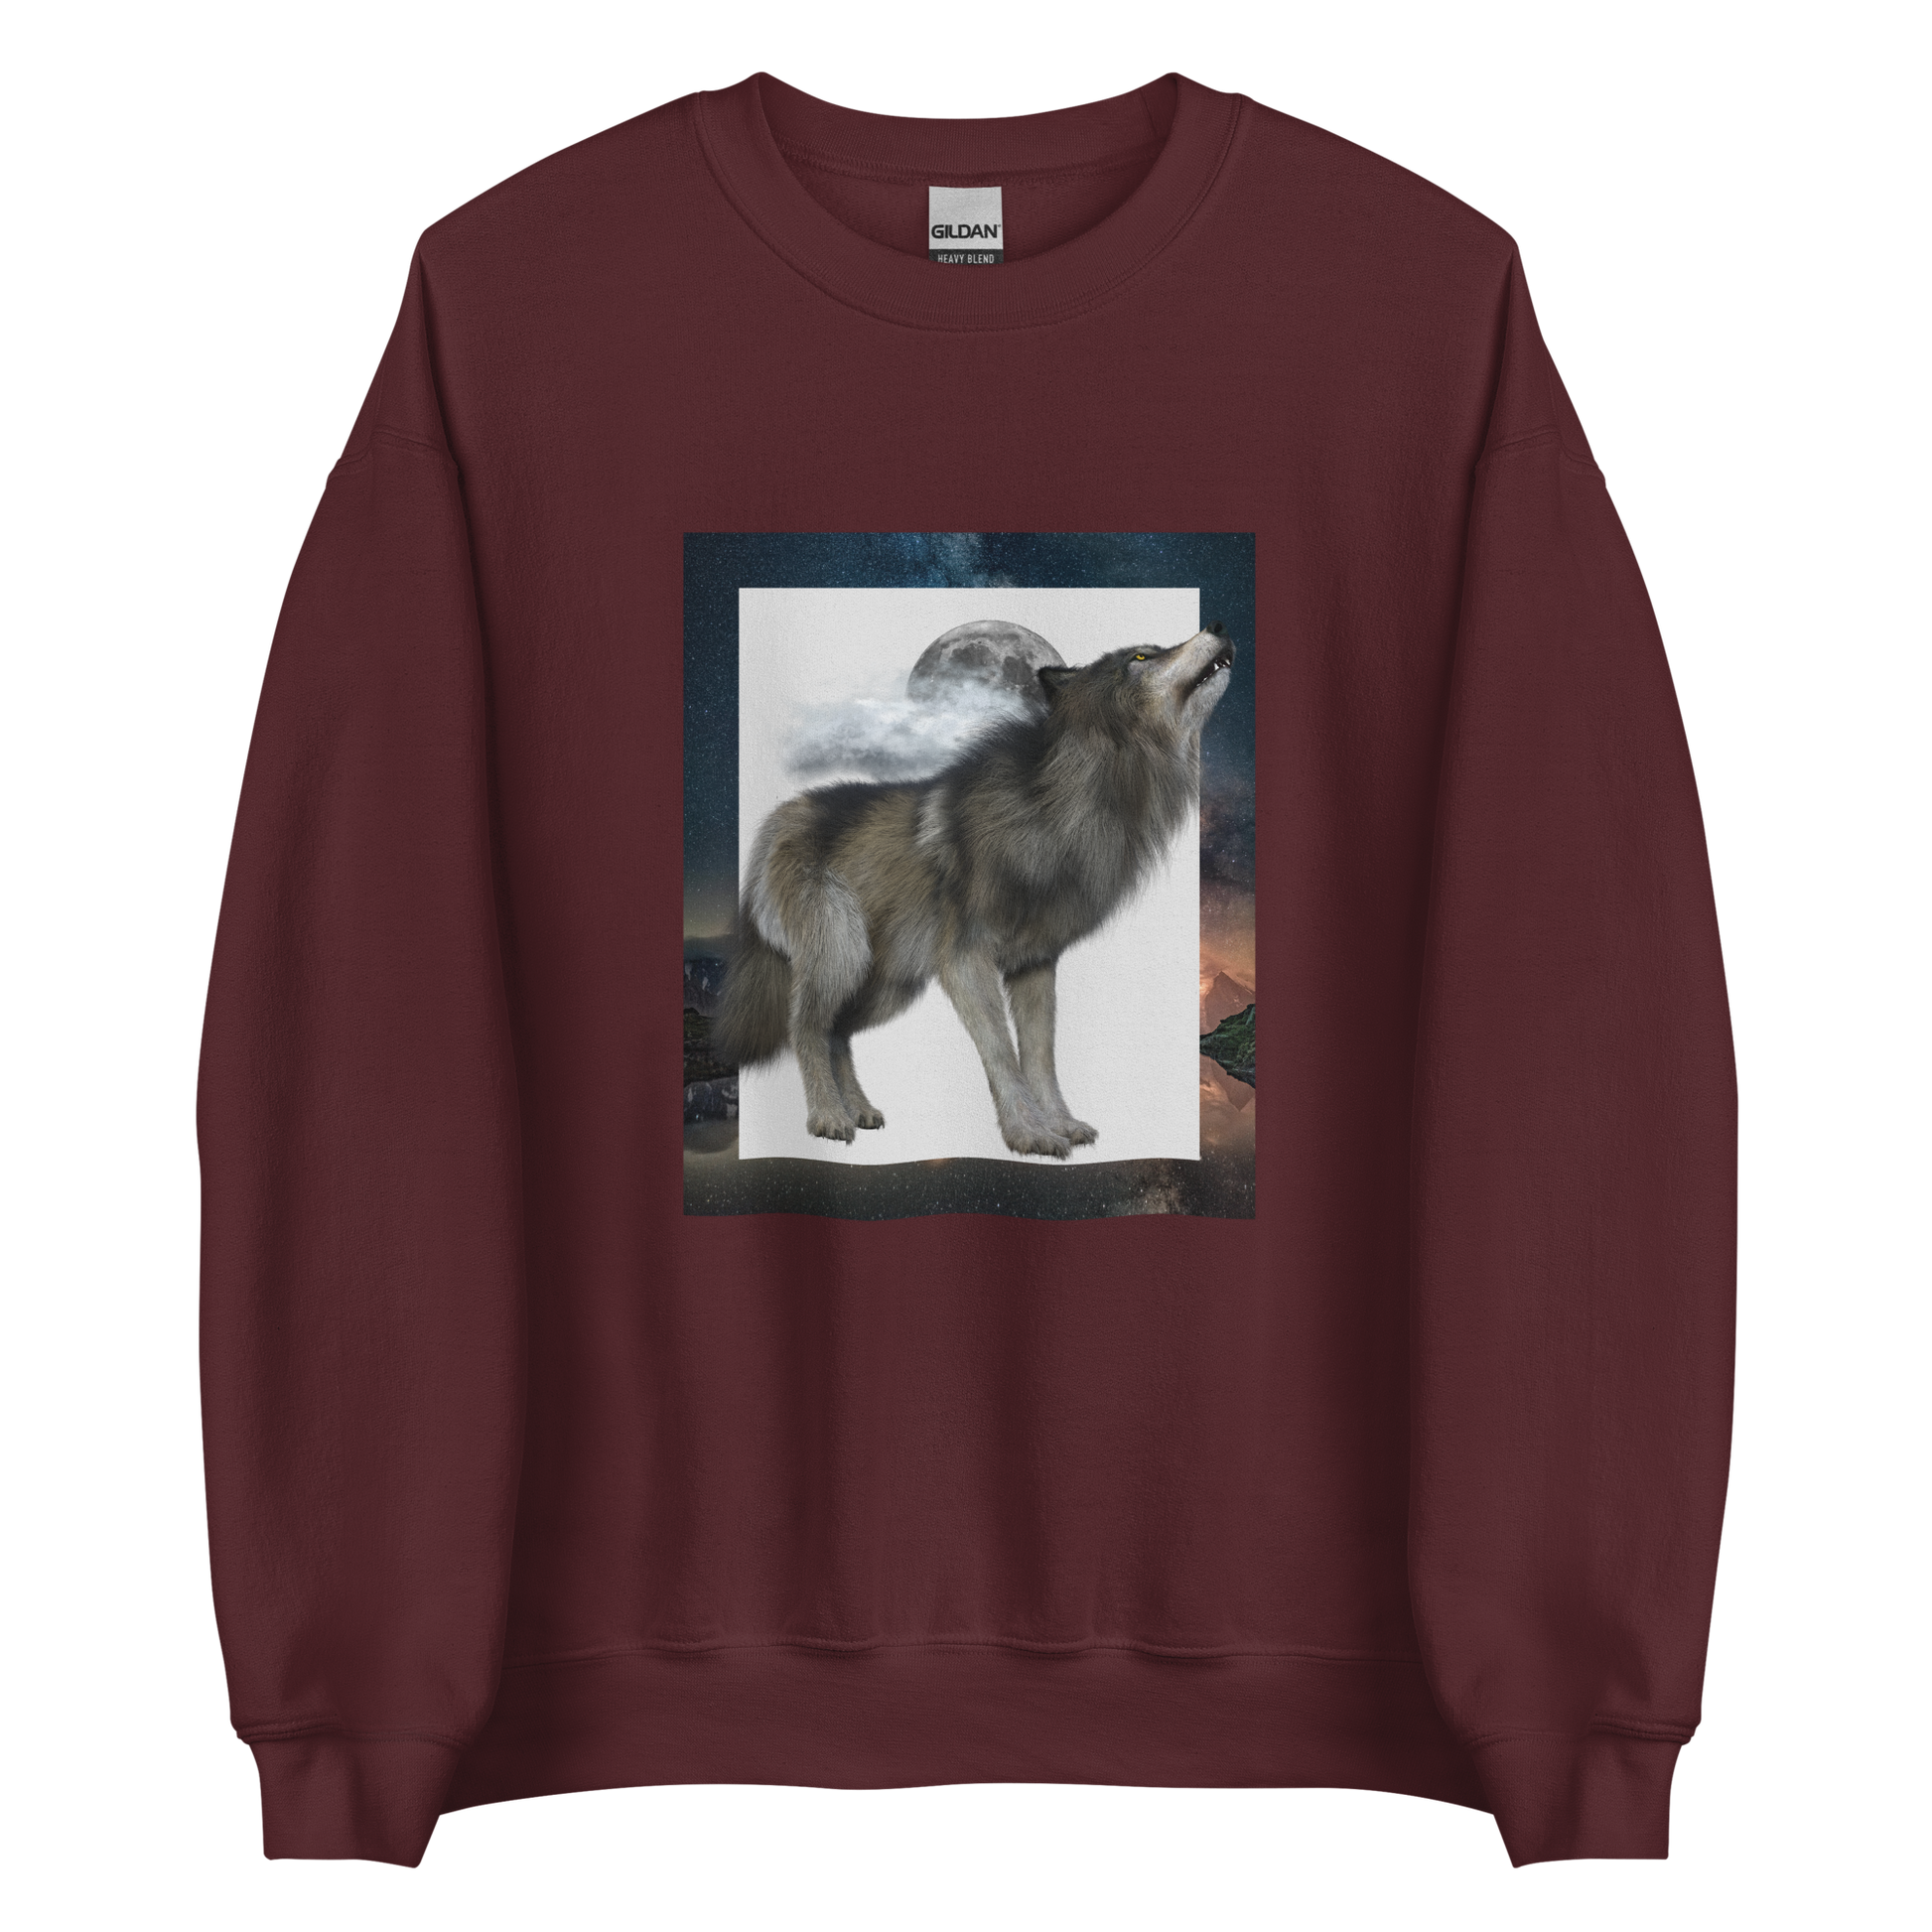 Maroon Wolf Sweatshirt featuring a fierce Wolf graphic on the chest - Cool Graphic Wolf Sweatshirts - Boozy Fox